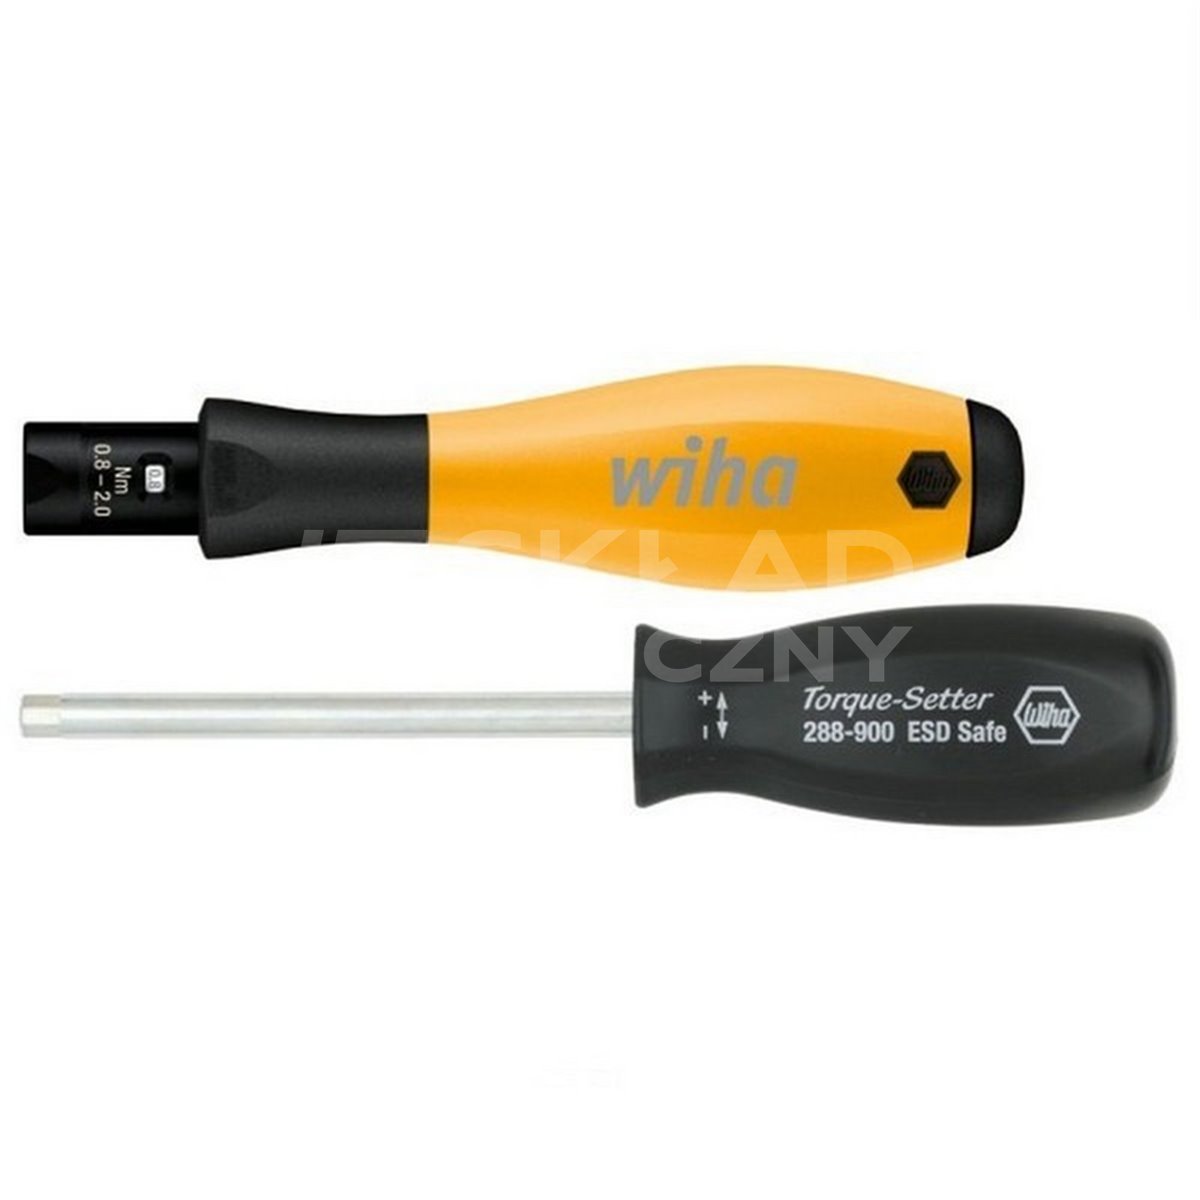 TorqueVario-S ESD 2882 0.1-0.6 127mm Wiha 26865 is a torque screwdriver.